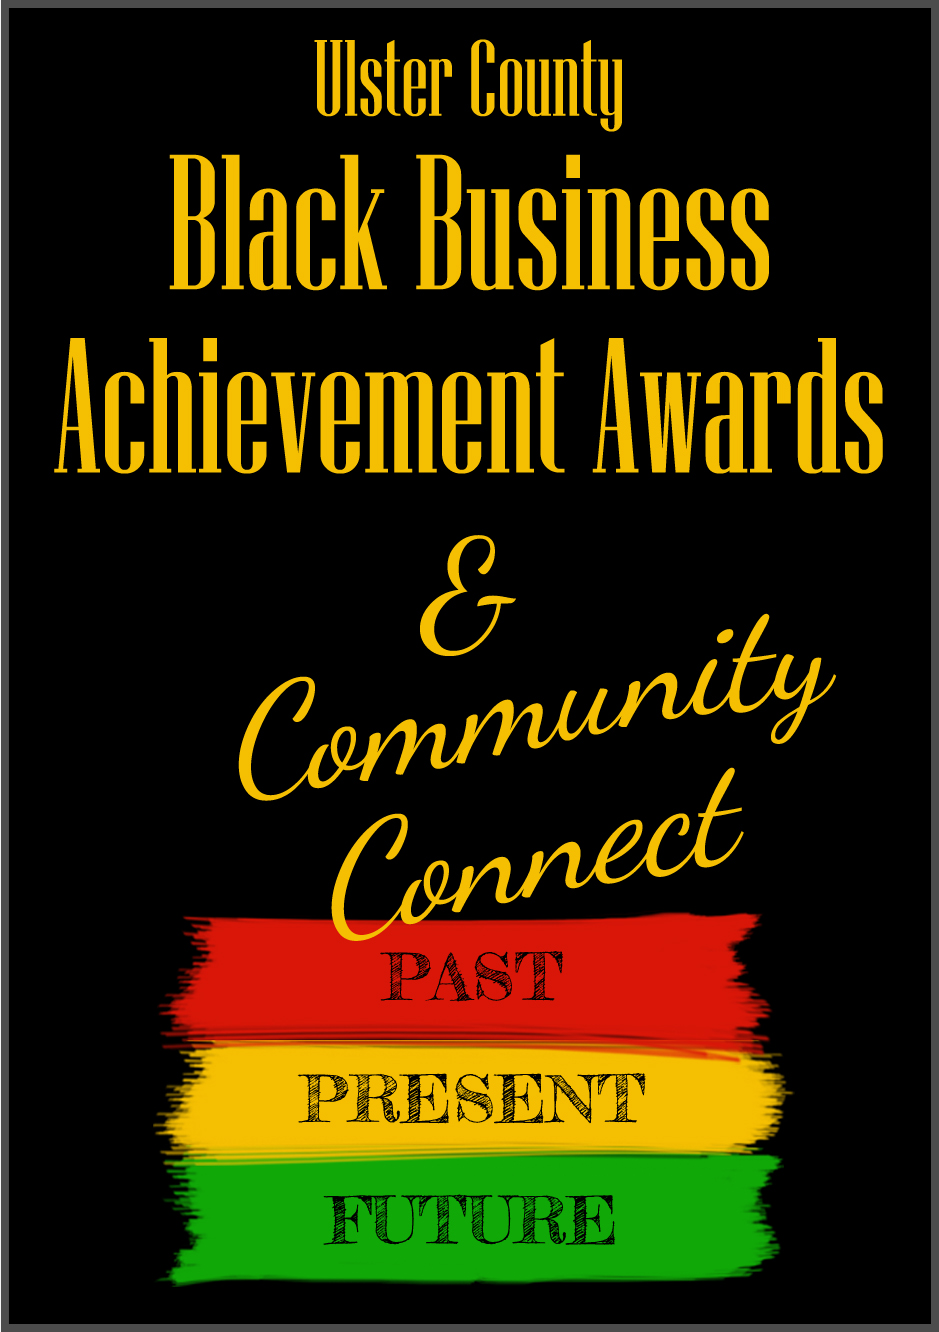 BlackBusinessAchievementCommunityConnect